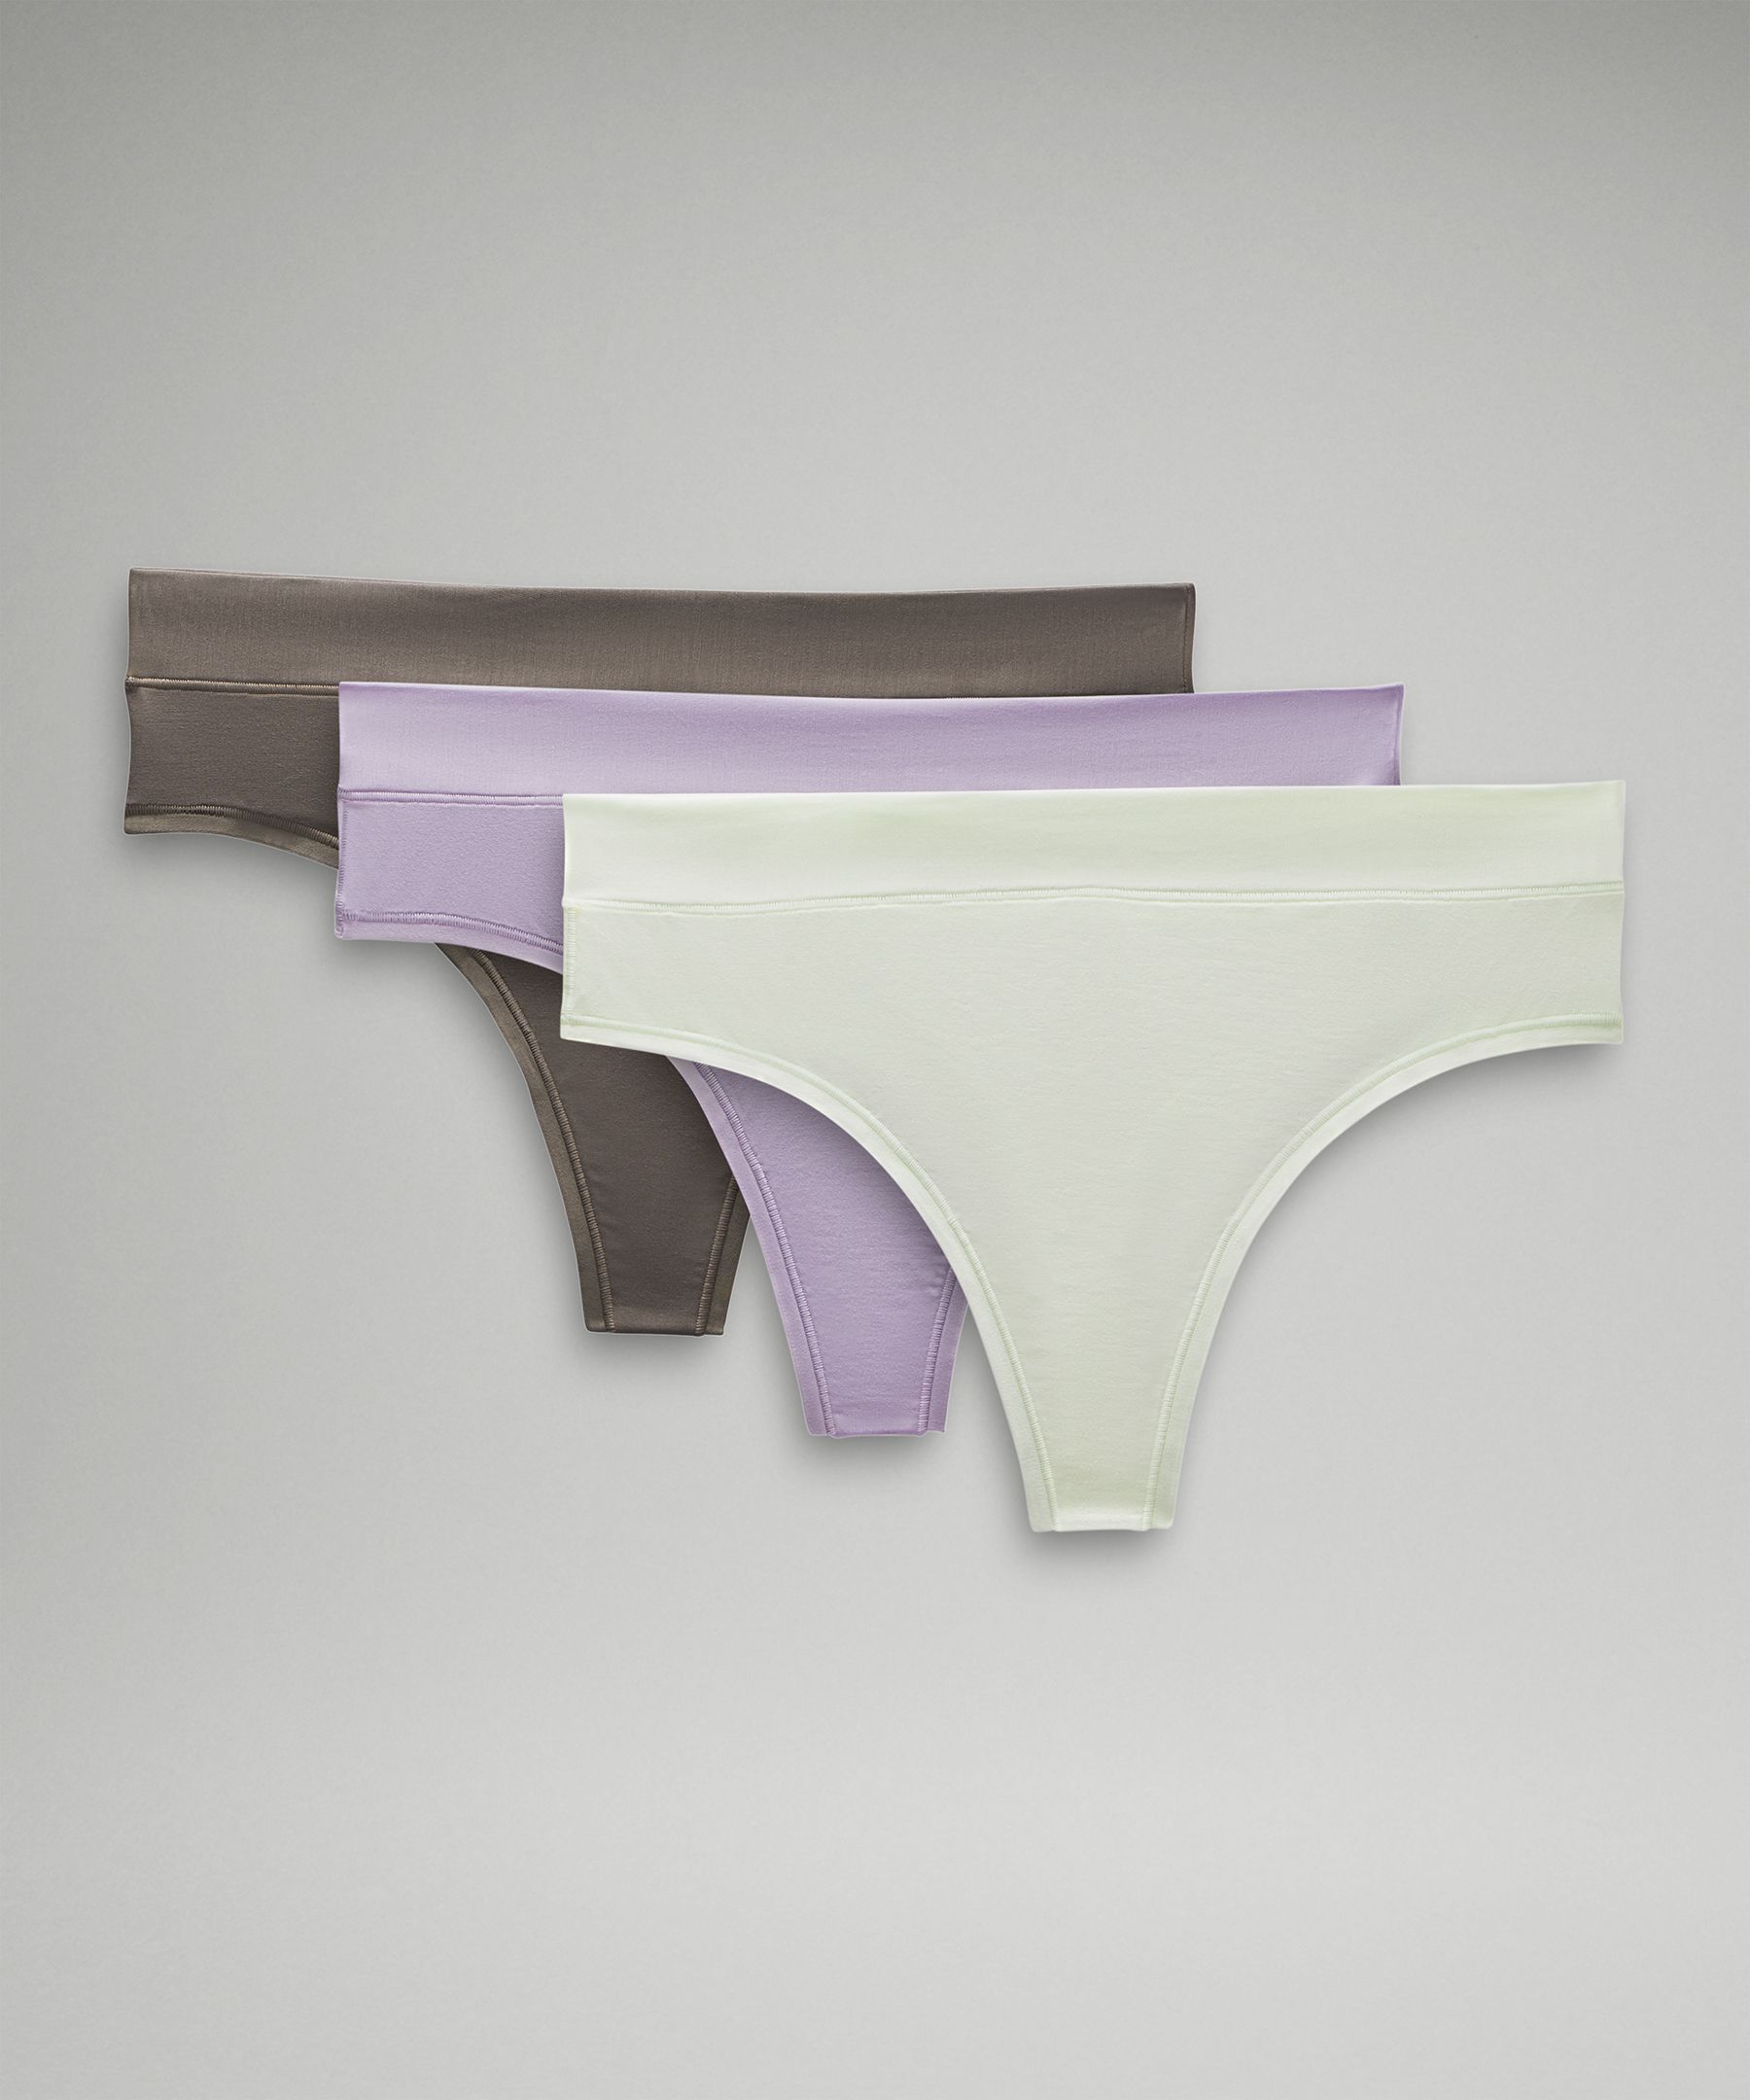 Lululemon Underease High-rise Thong Underwear 3 Pack